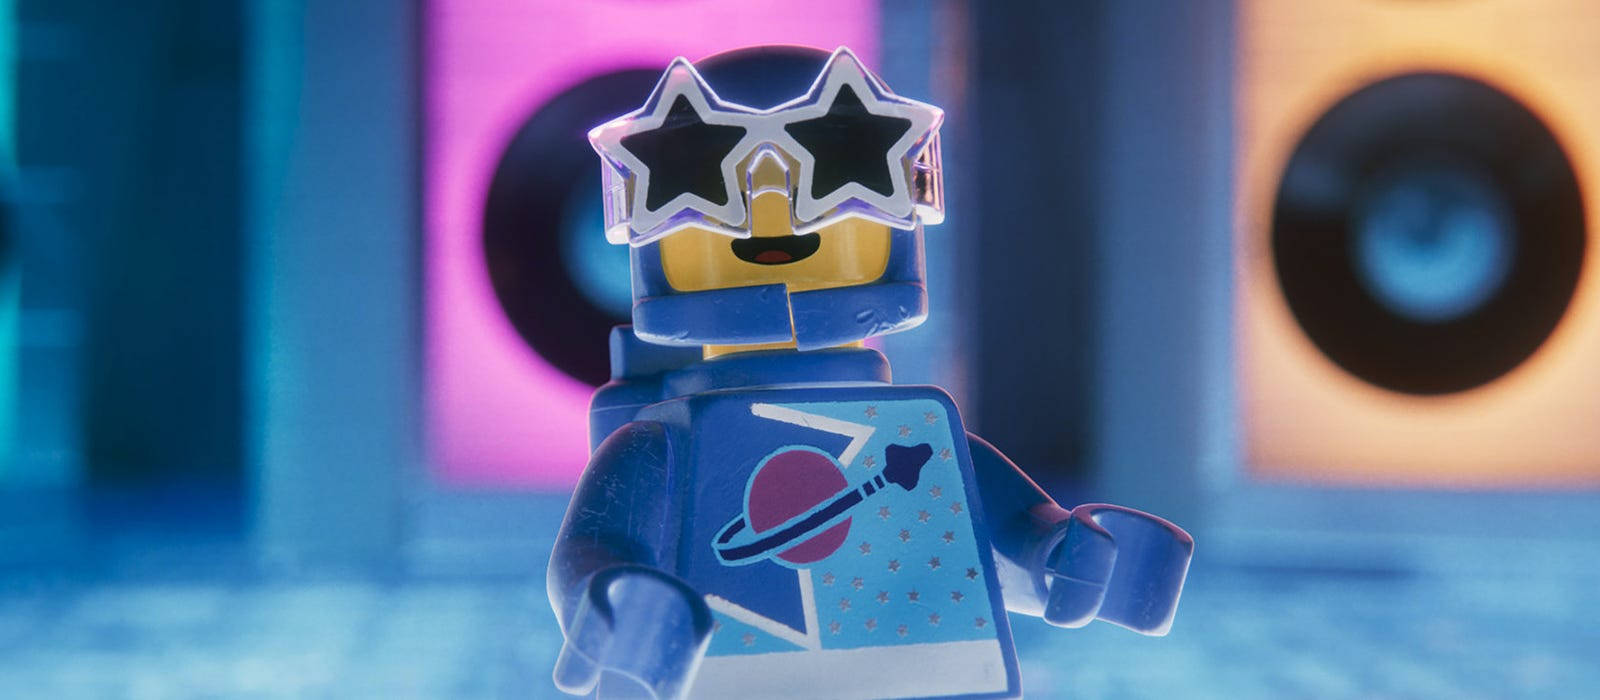 The Lego Movie Astronaut Background